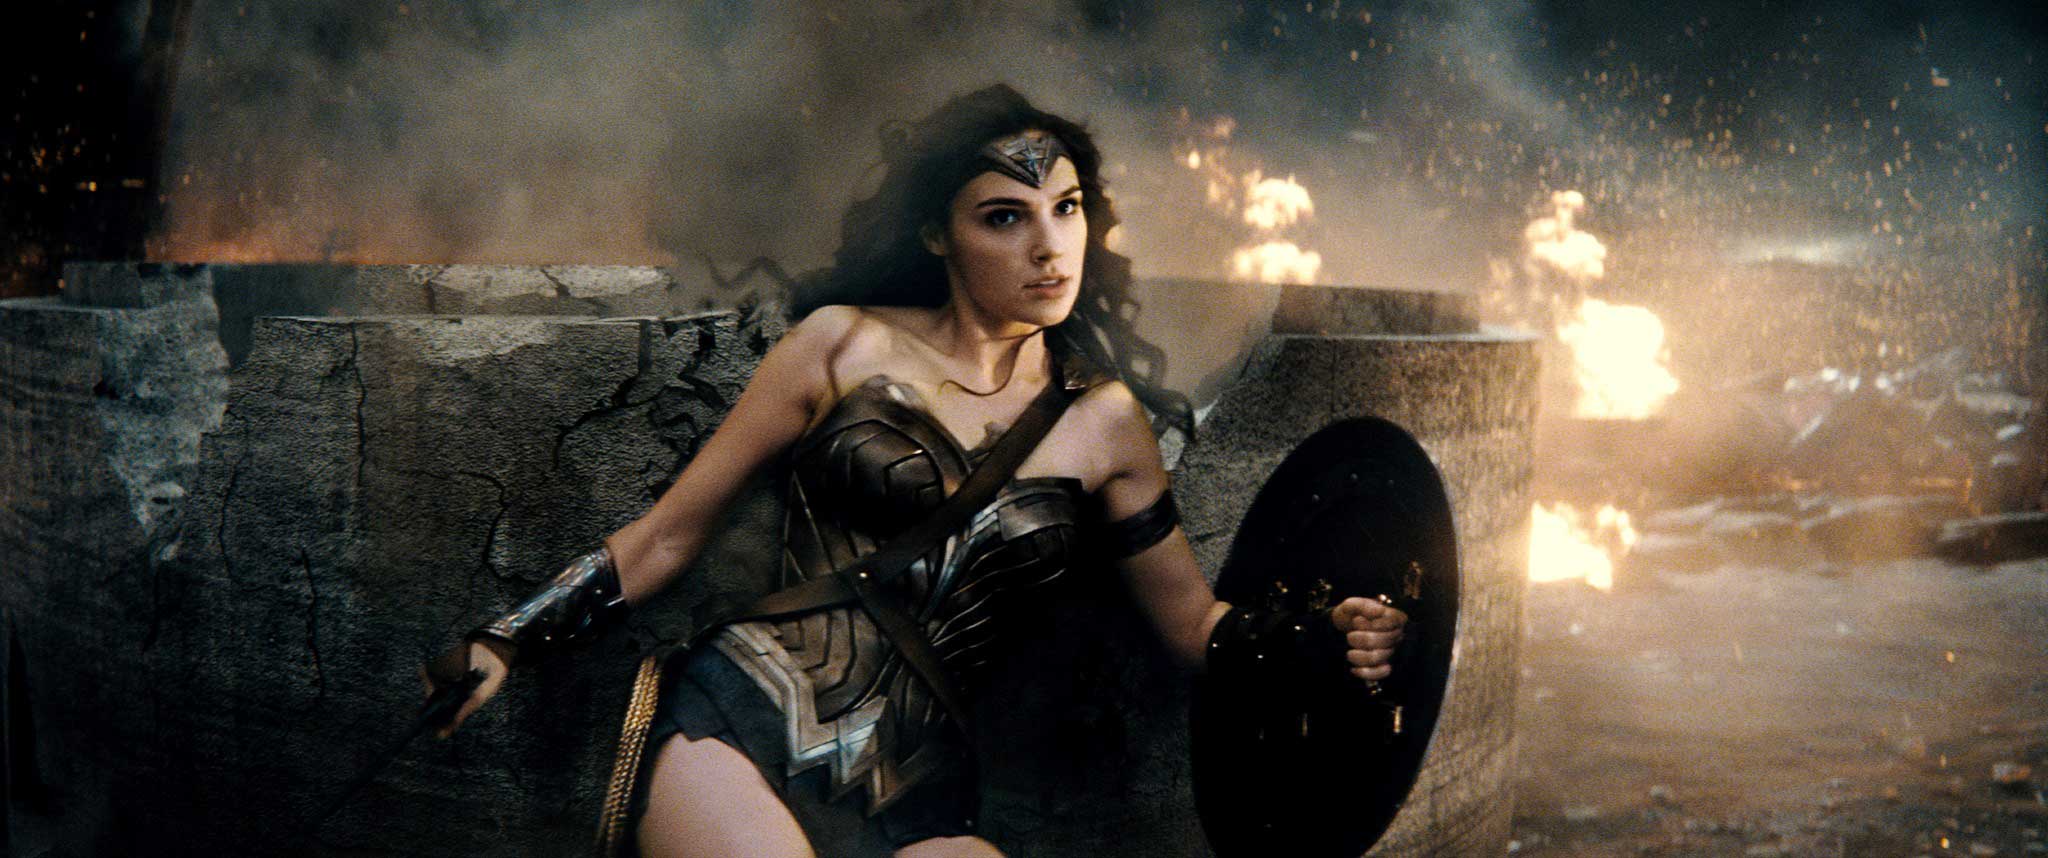 Batman v Superman': Wonder Woman Steals the Spotlight | Time